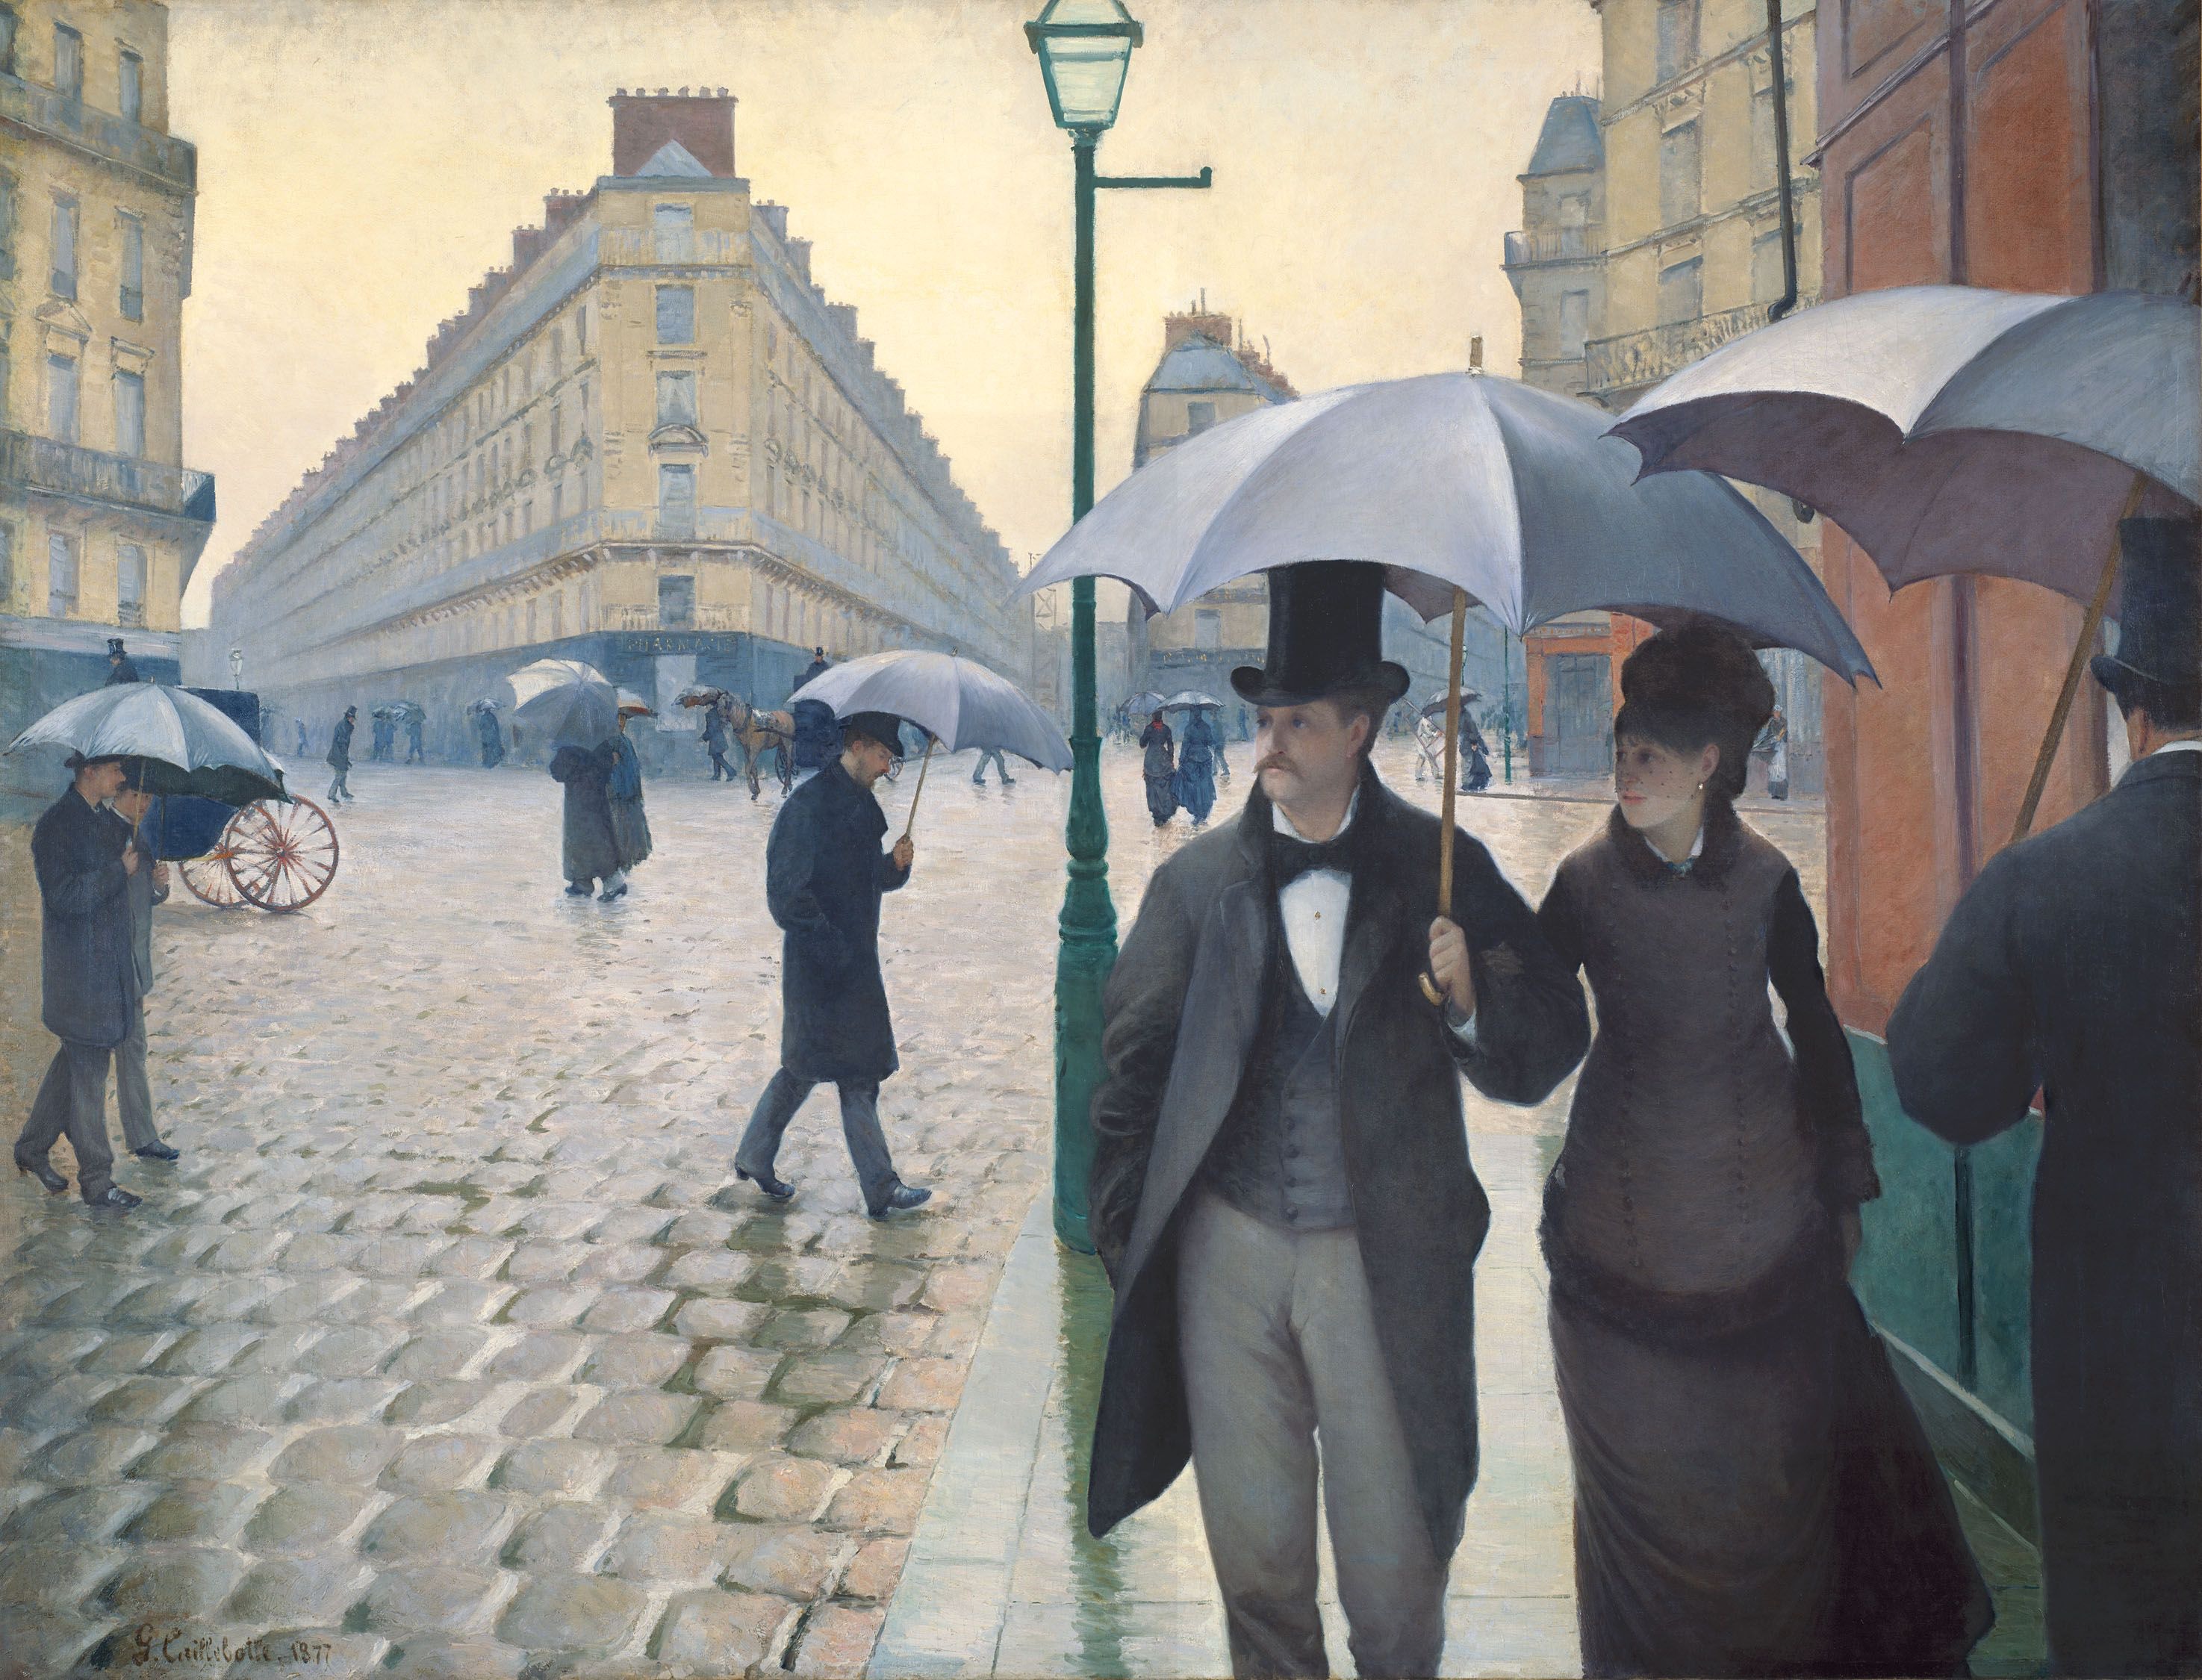 Stradă din Paris; Zi ploioasă  by Gustave Caillebotte - 1877 - 83 1/2 x 108 3/4in 